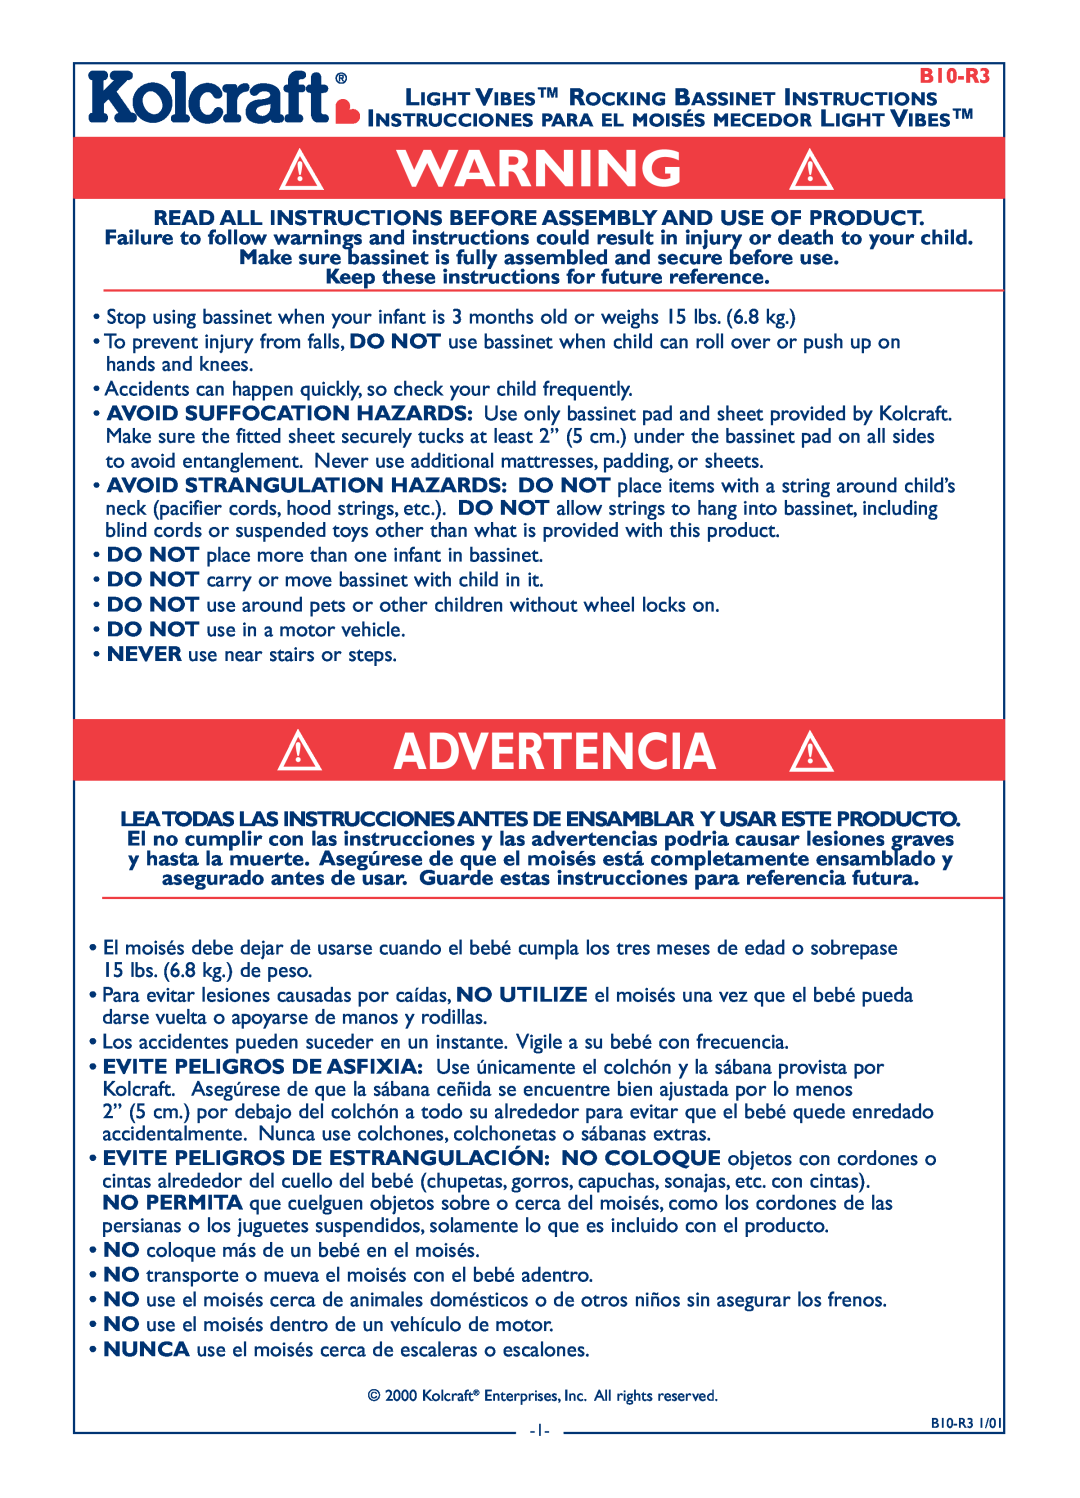 Kolcraft B10-R3 manual Advertencia 